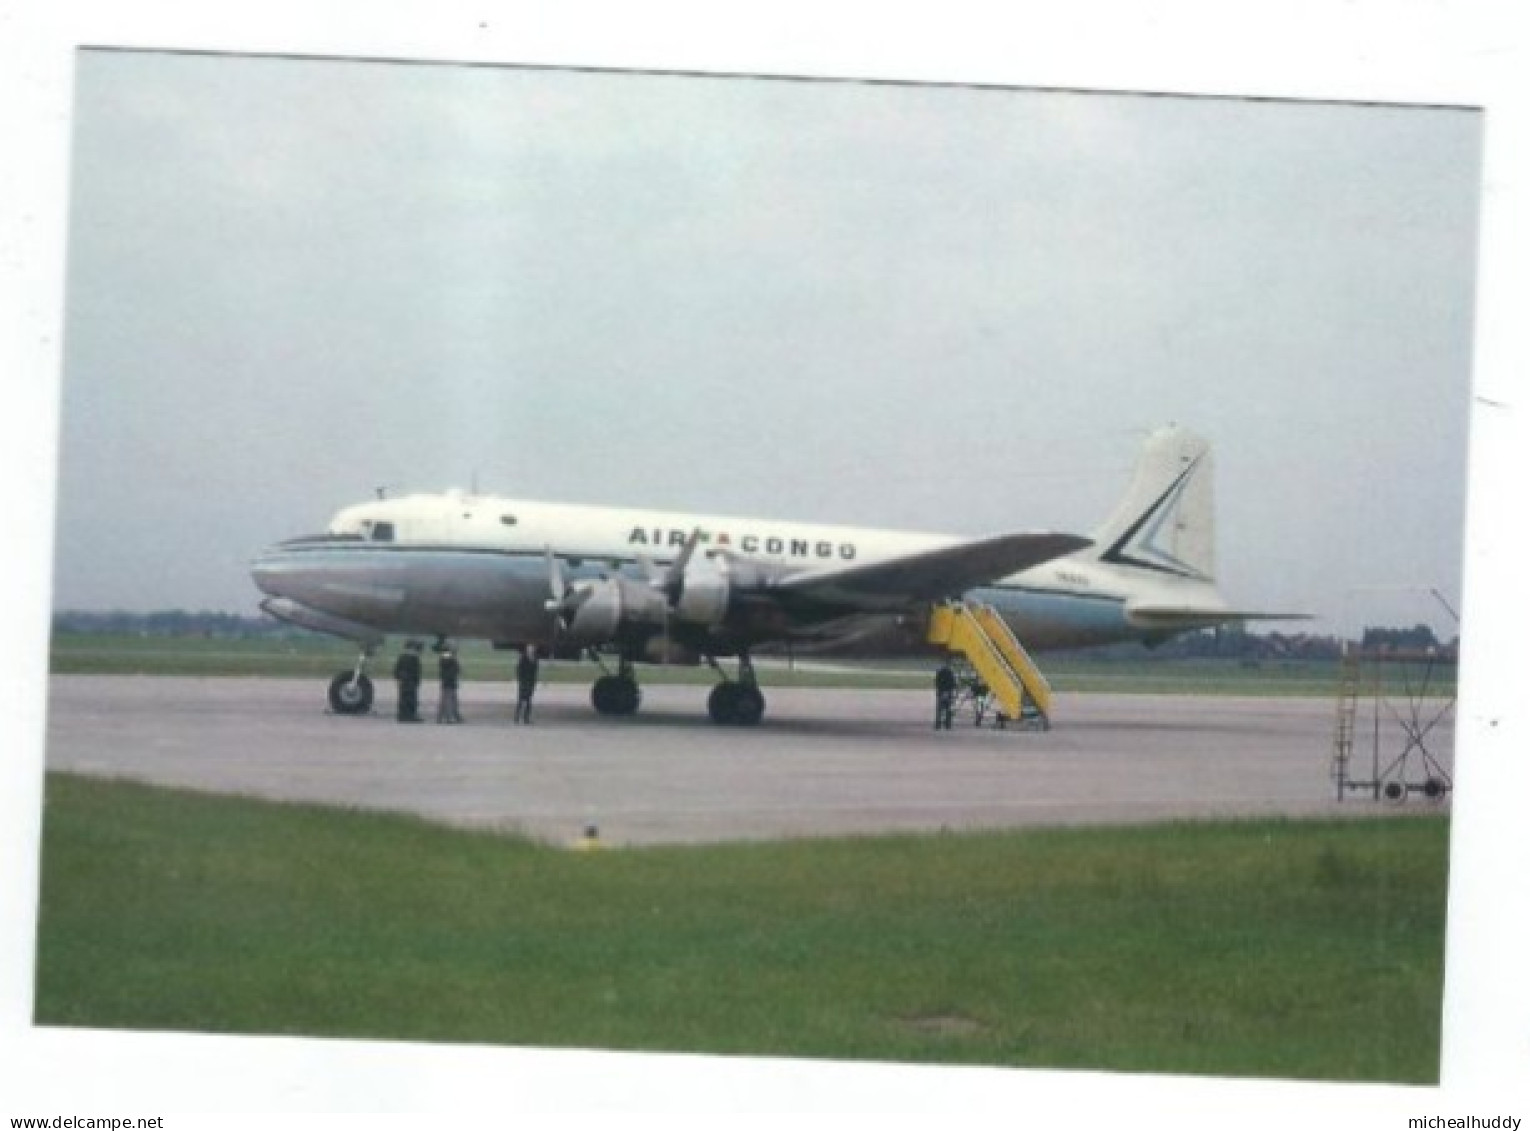 POSTCARD   PUBL BY FLIGHTPATH  LTD EDITITION OF 200  AIR CONGO  DC4  AIRCRAFT NO FP 261 - 1946-....: Modern Era